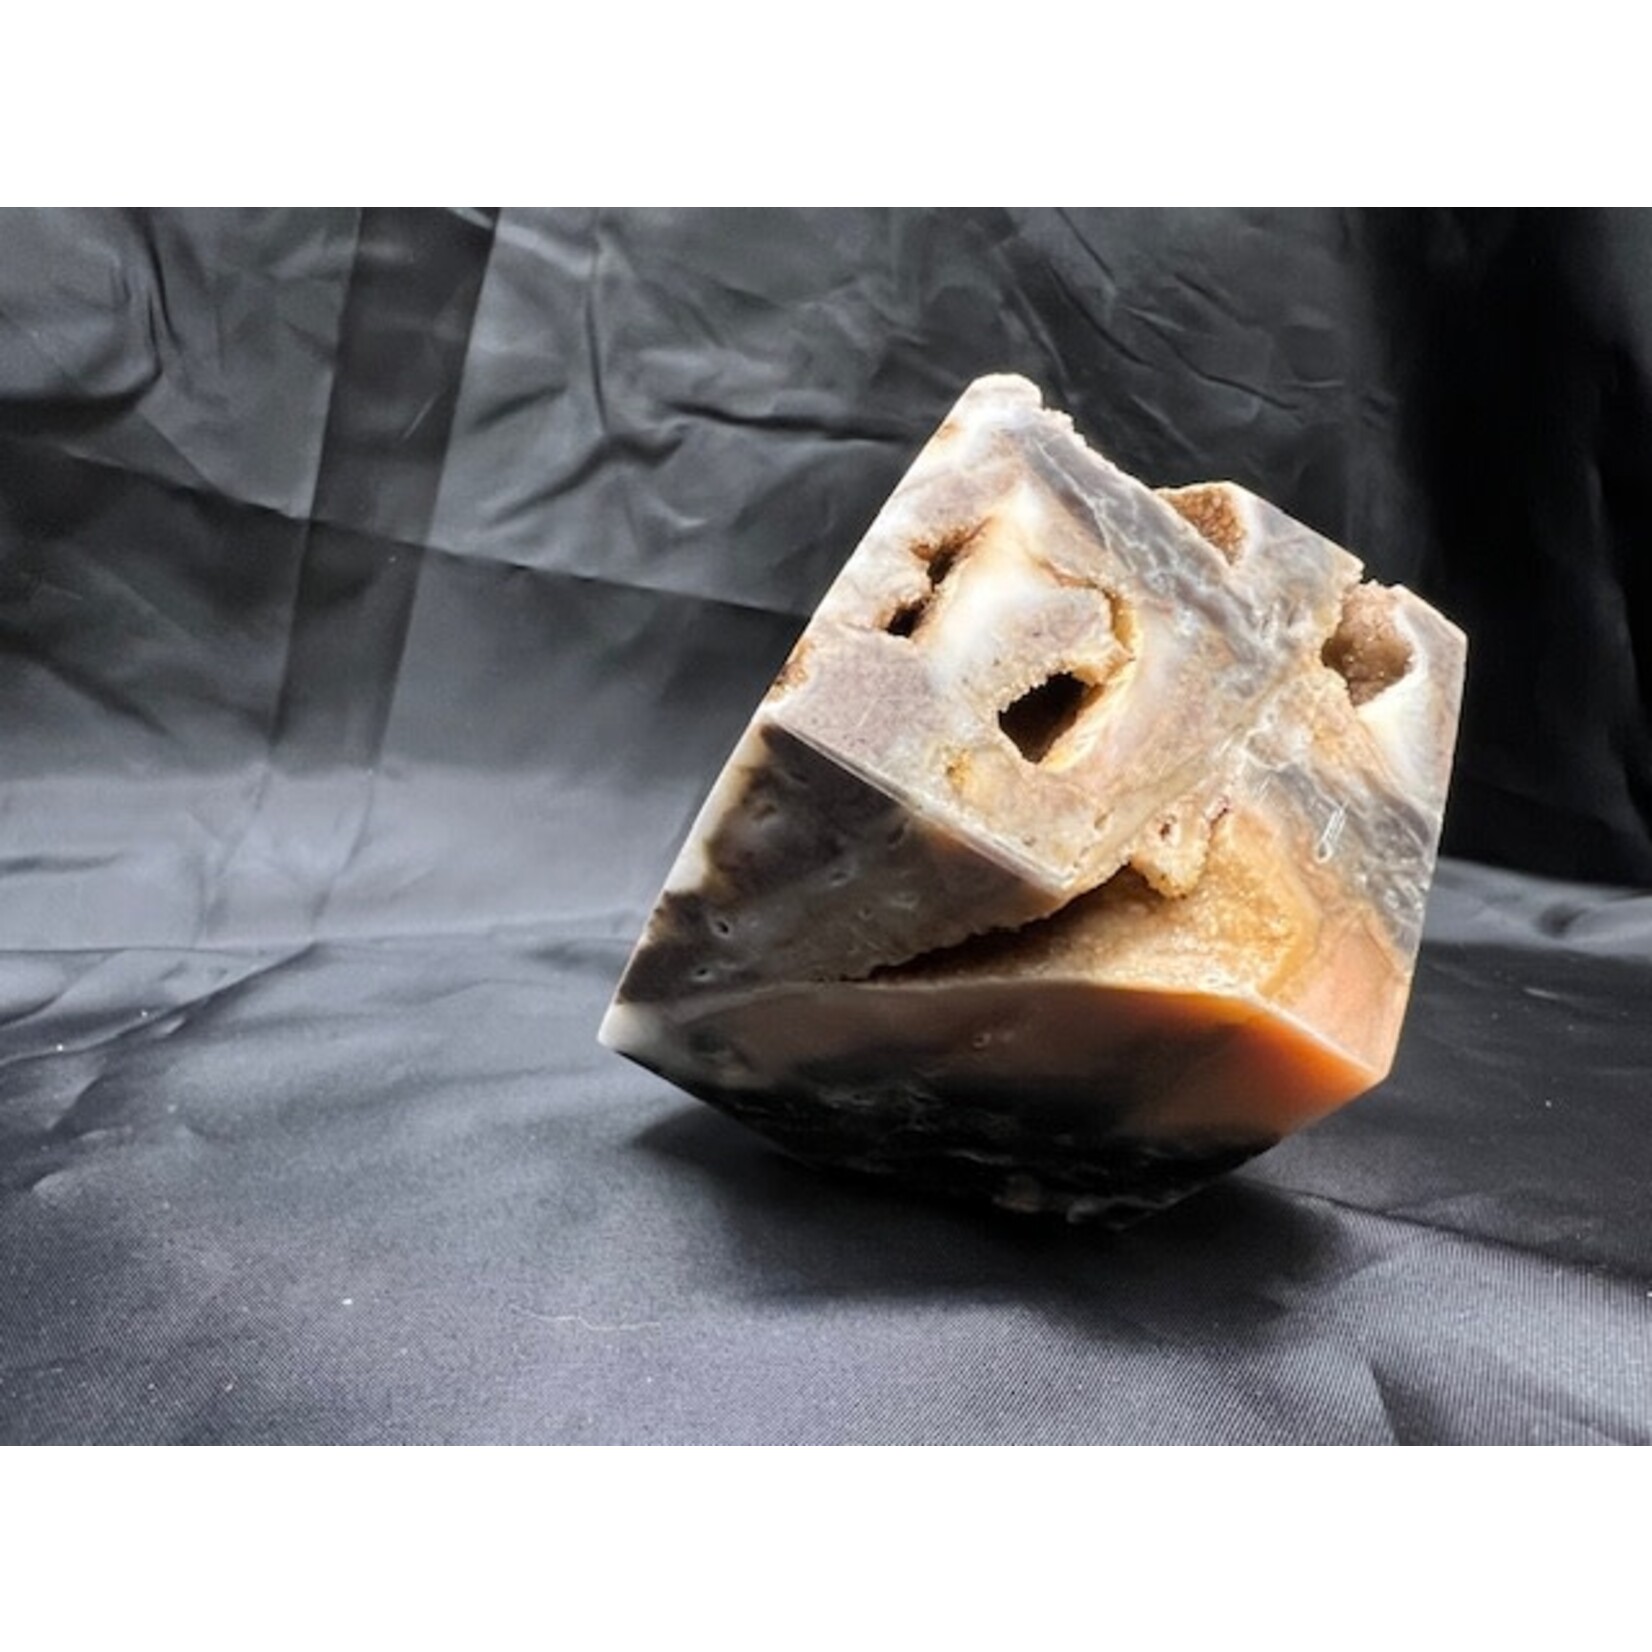 Sfaleriet (zinkblende) kubus 6x6x6 cm | 0.382 kg